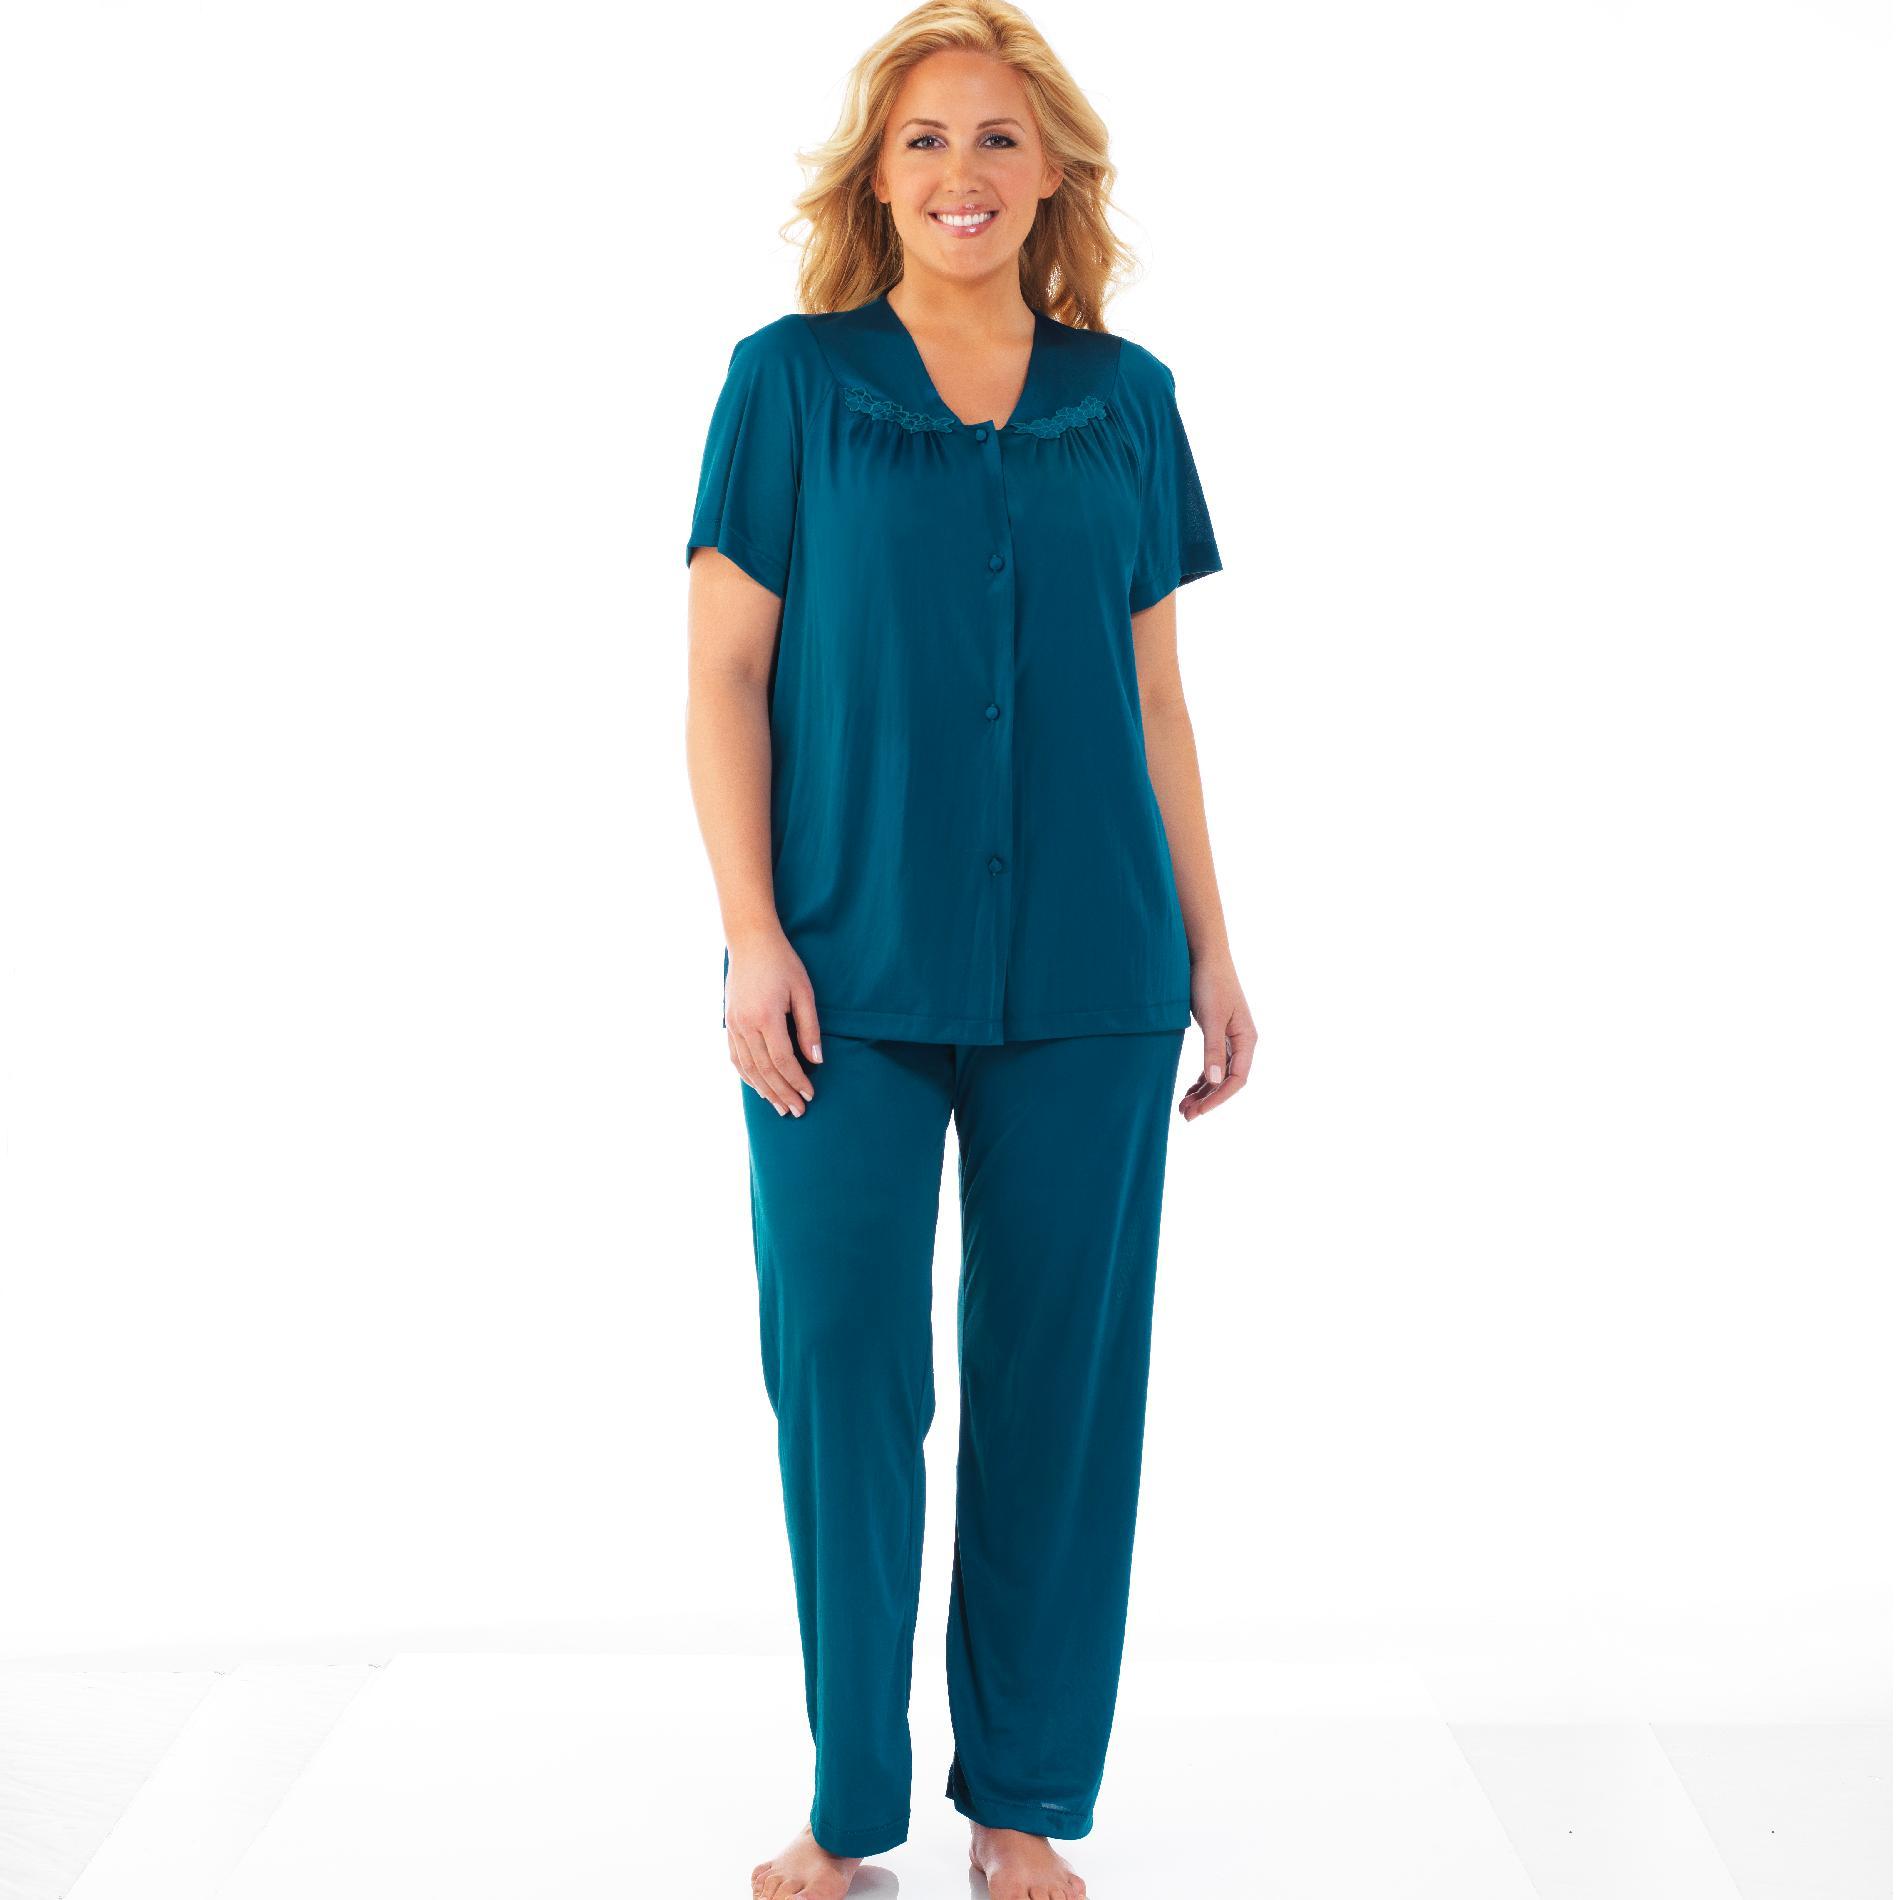 UPC 083623334233 product image for Women's Vanity Fair Colortura Short Sleeve Pajama Set | upcitemdb.com